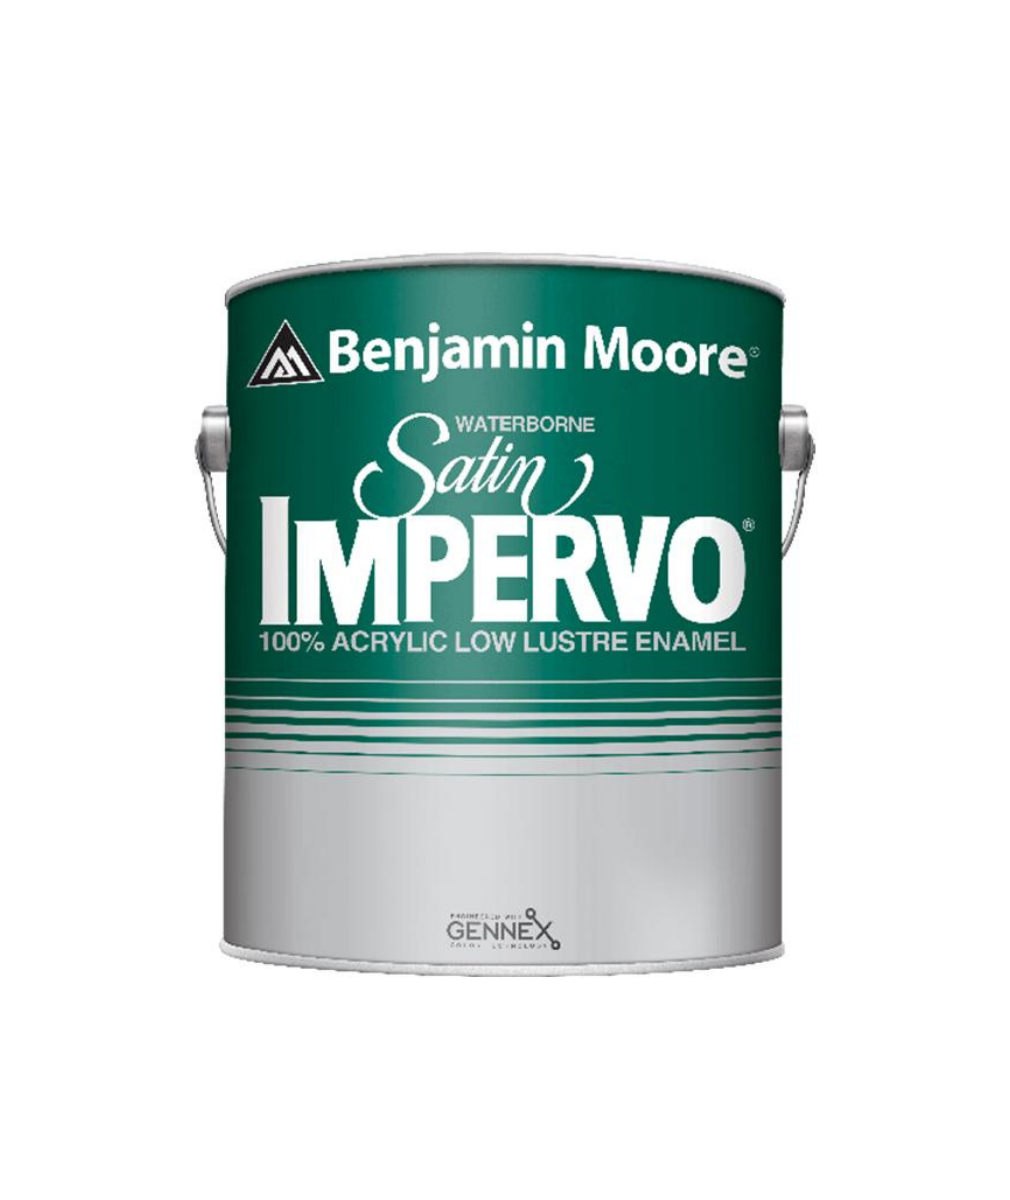 Waterborne Satin Impervo® Paint